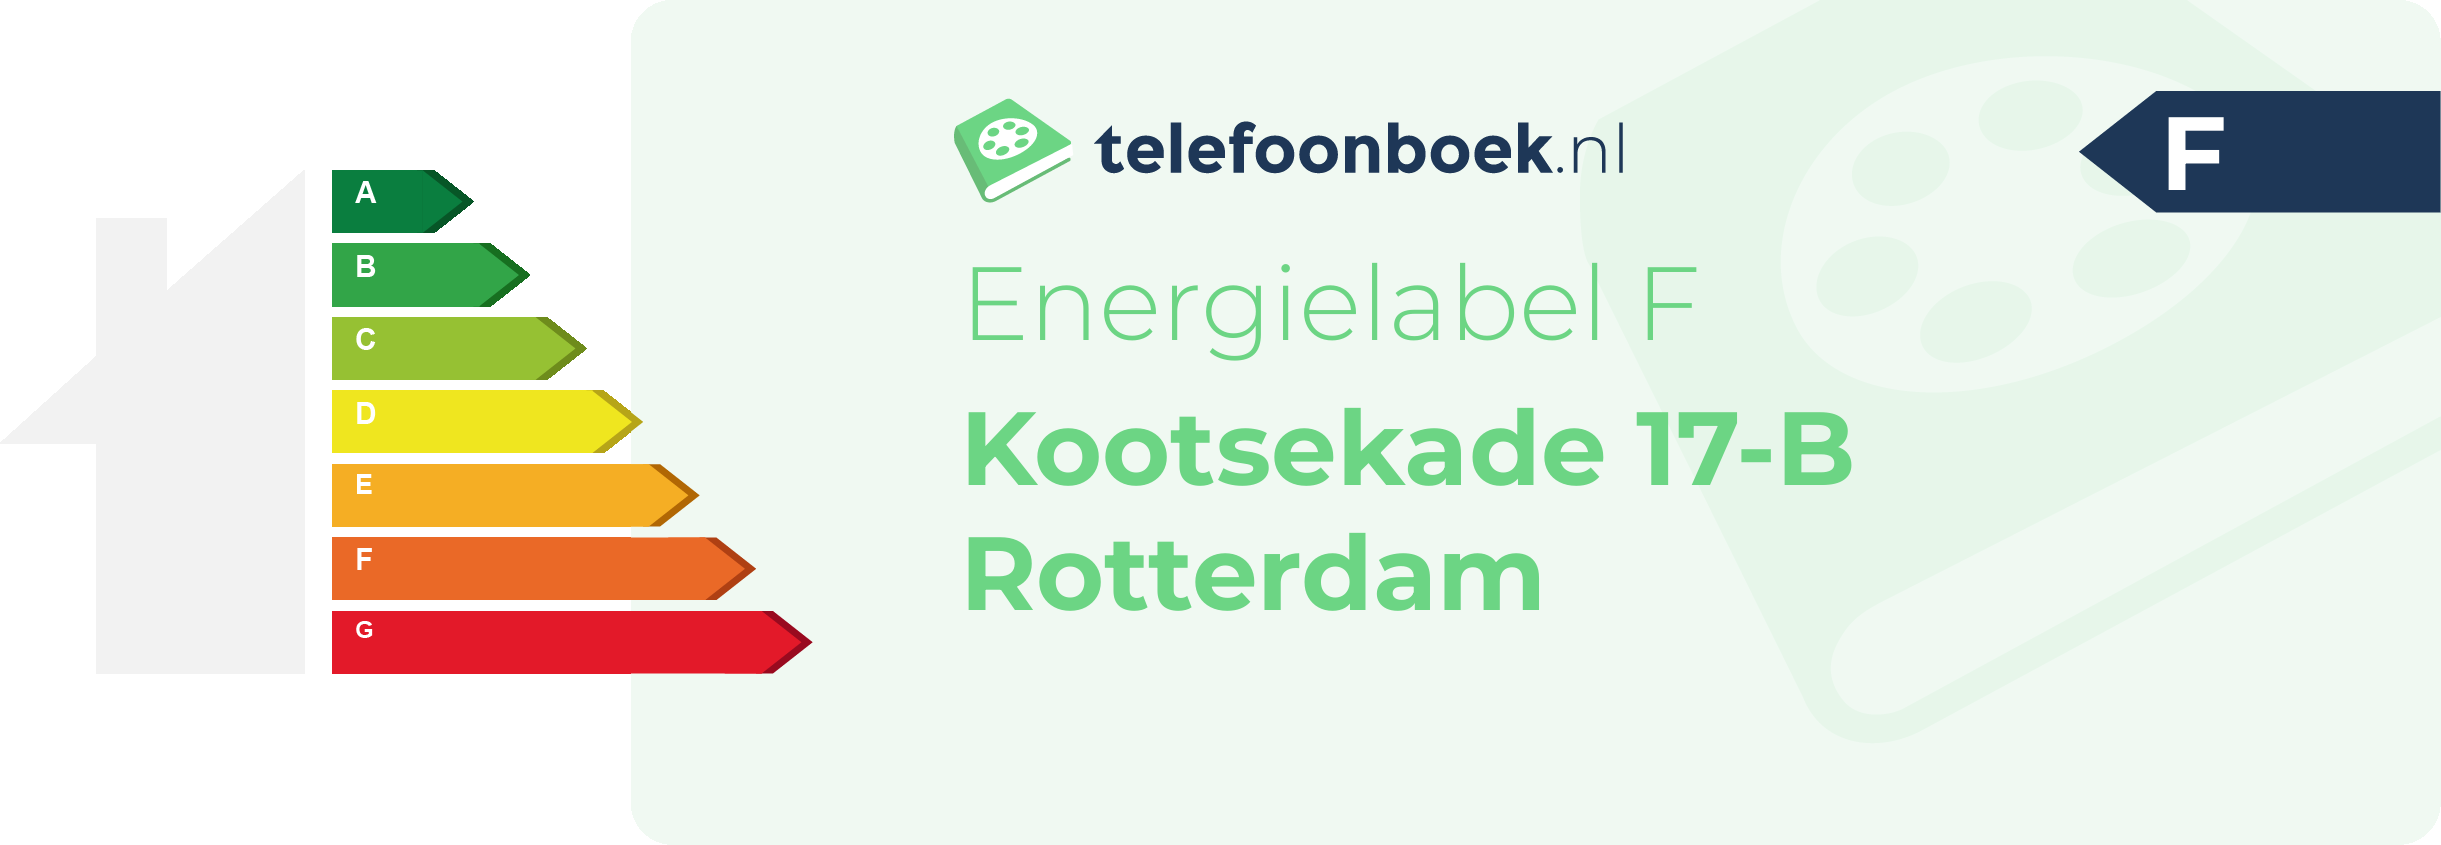 Energielabel Kootsekade 17-B Rotterdam